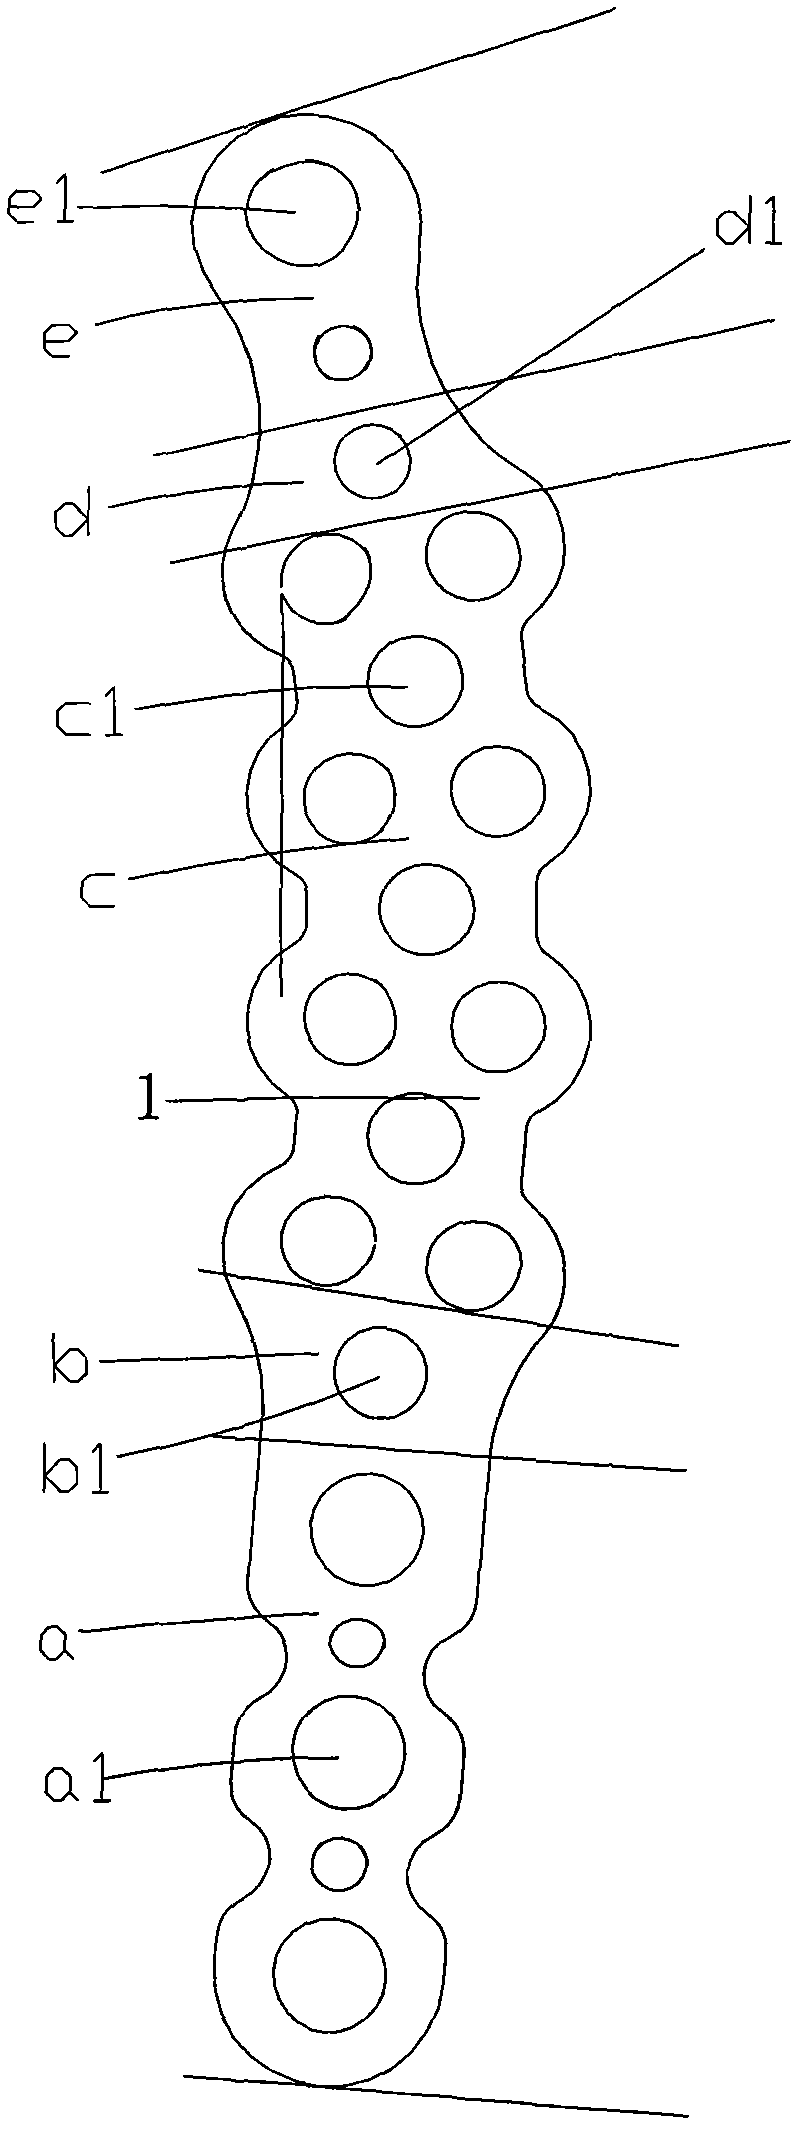 Self-locking acetabular posterior-wall posterior-column anatomical steel plate